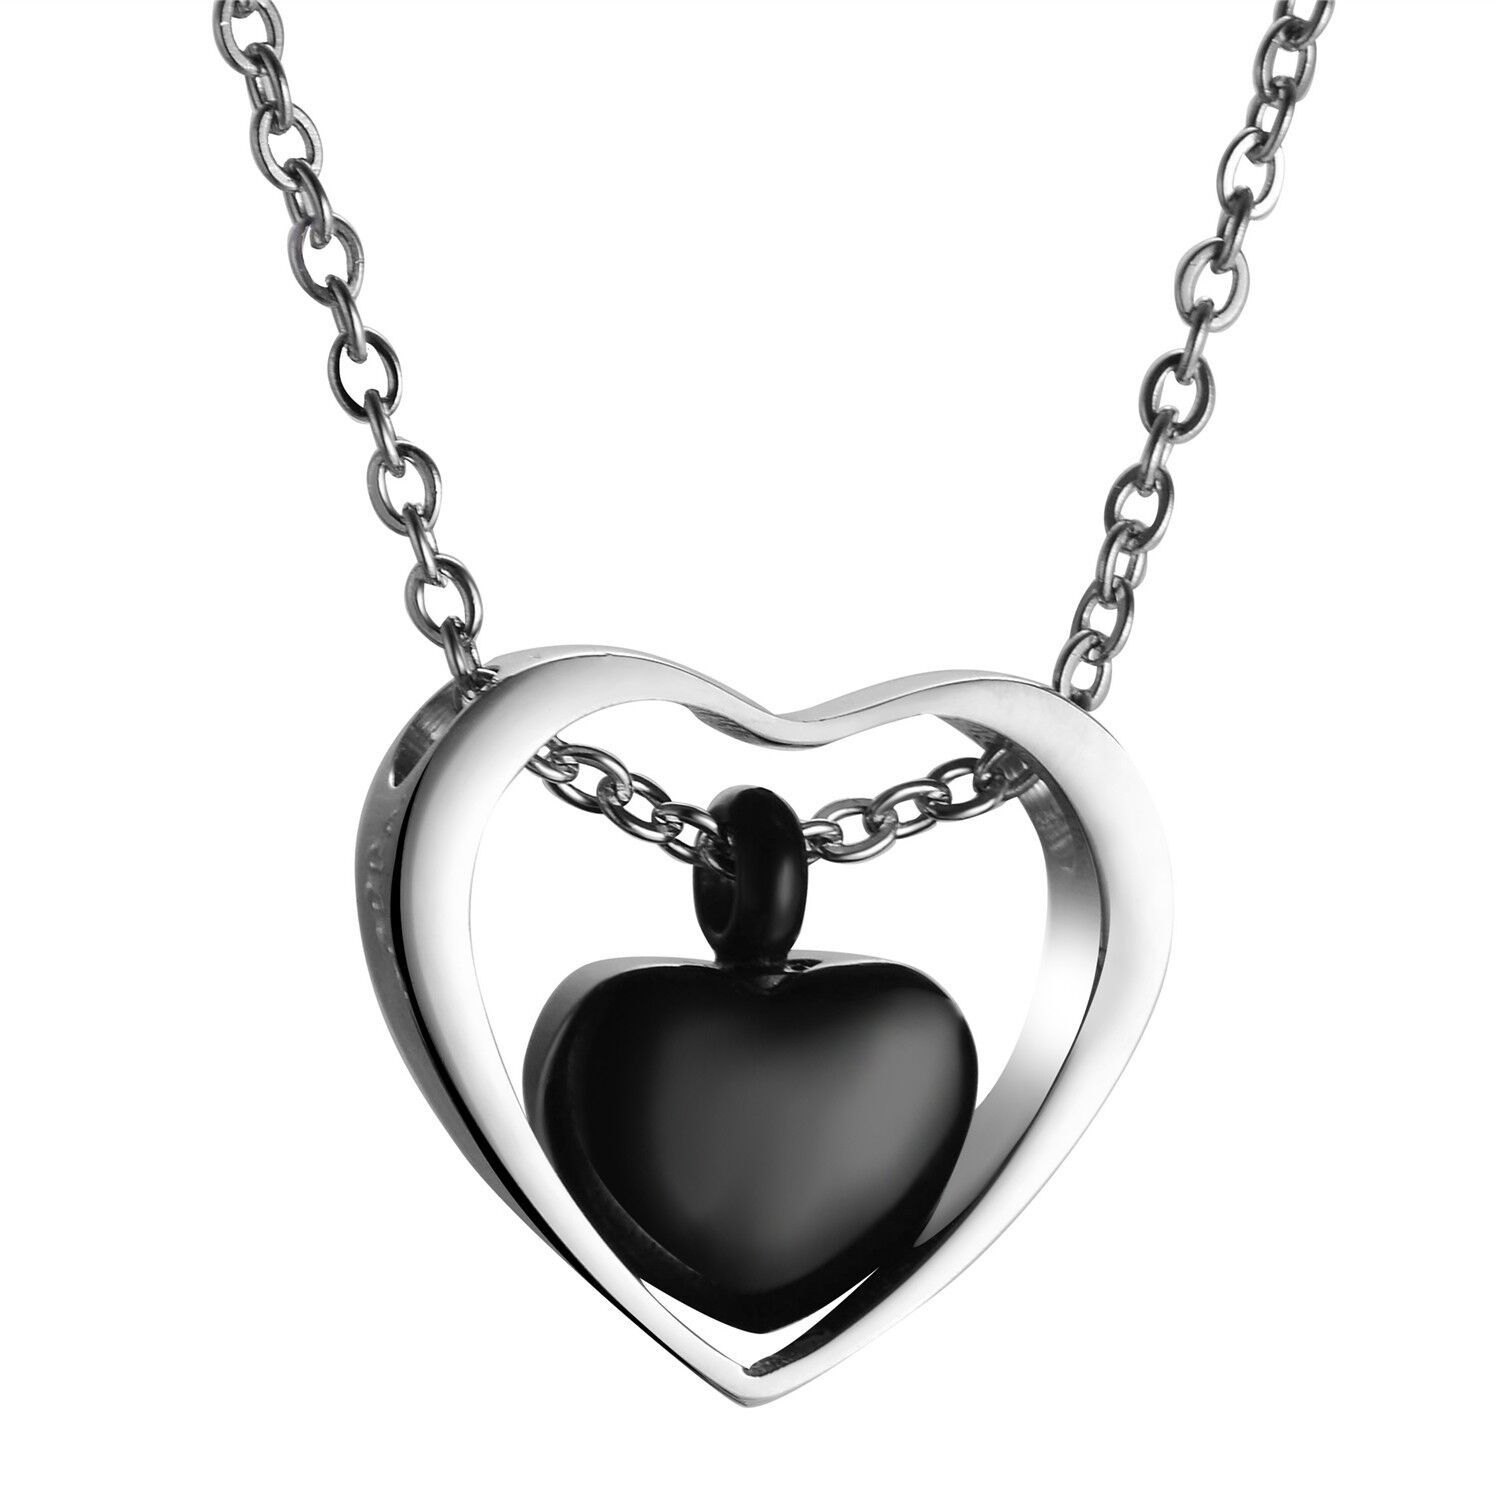 Large double heart necklace black